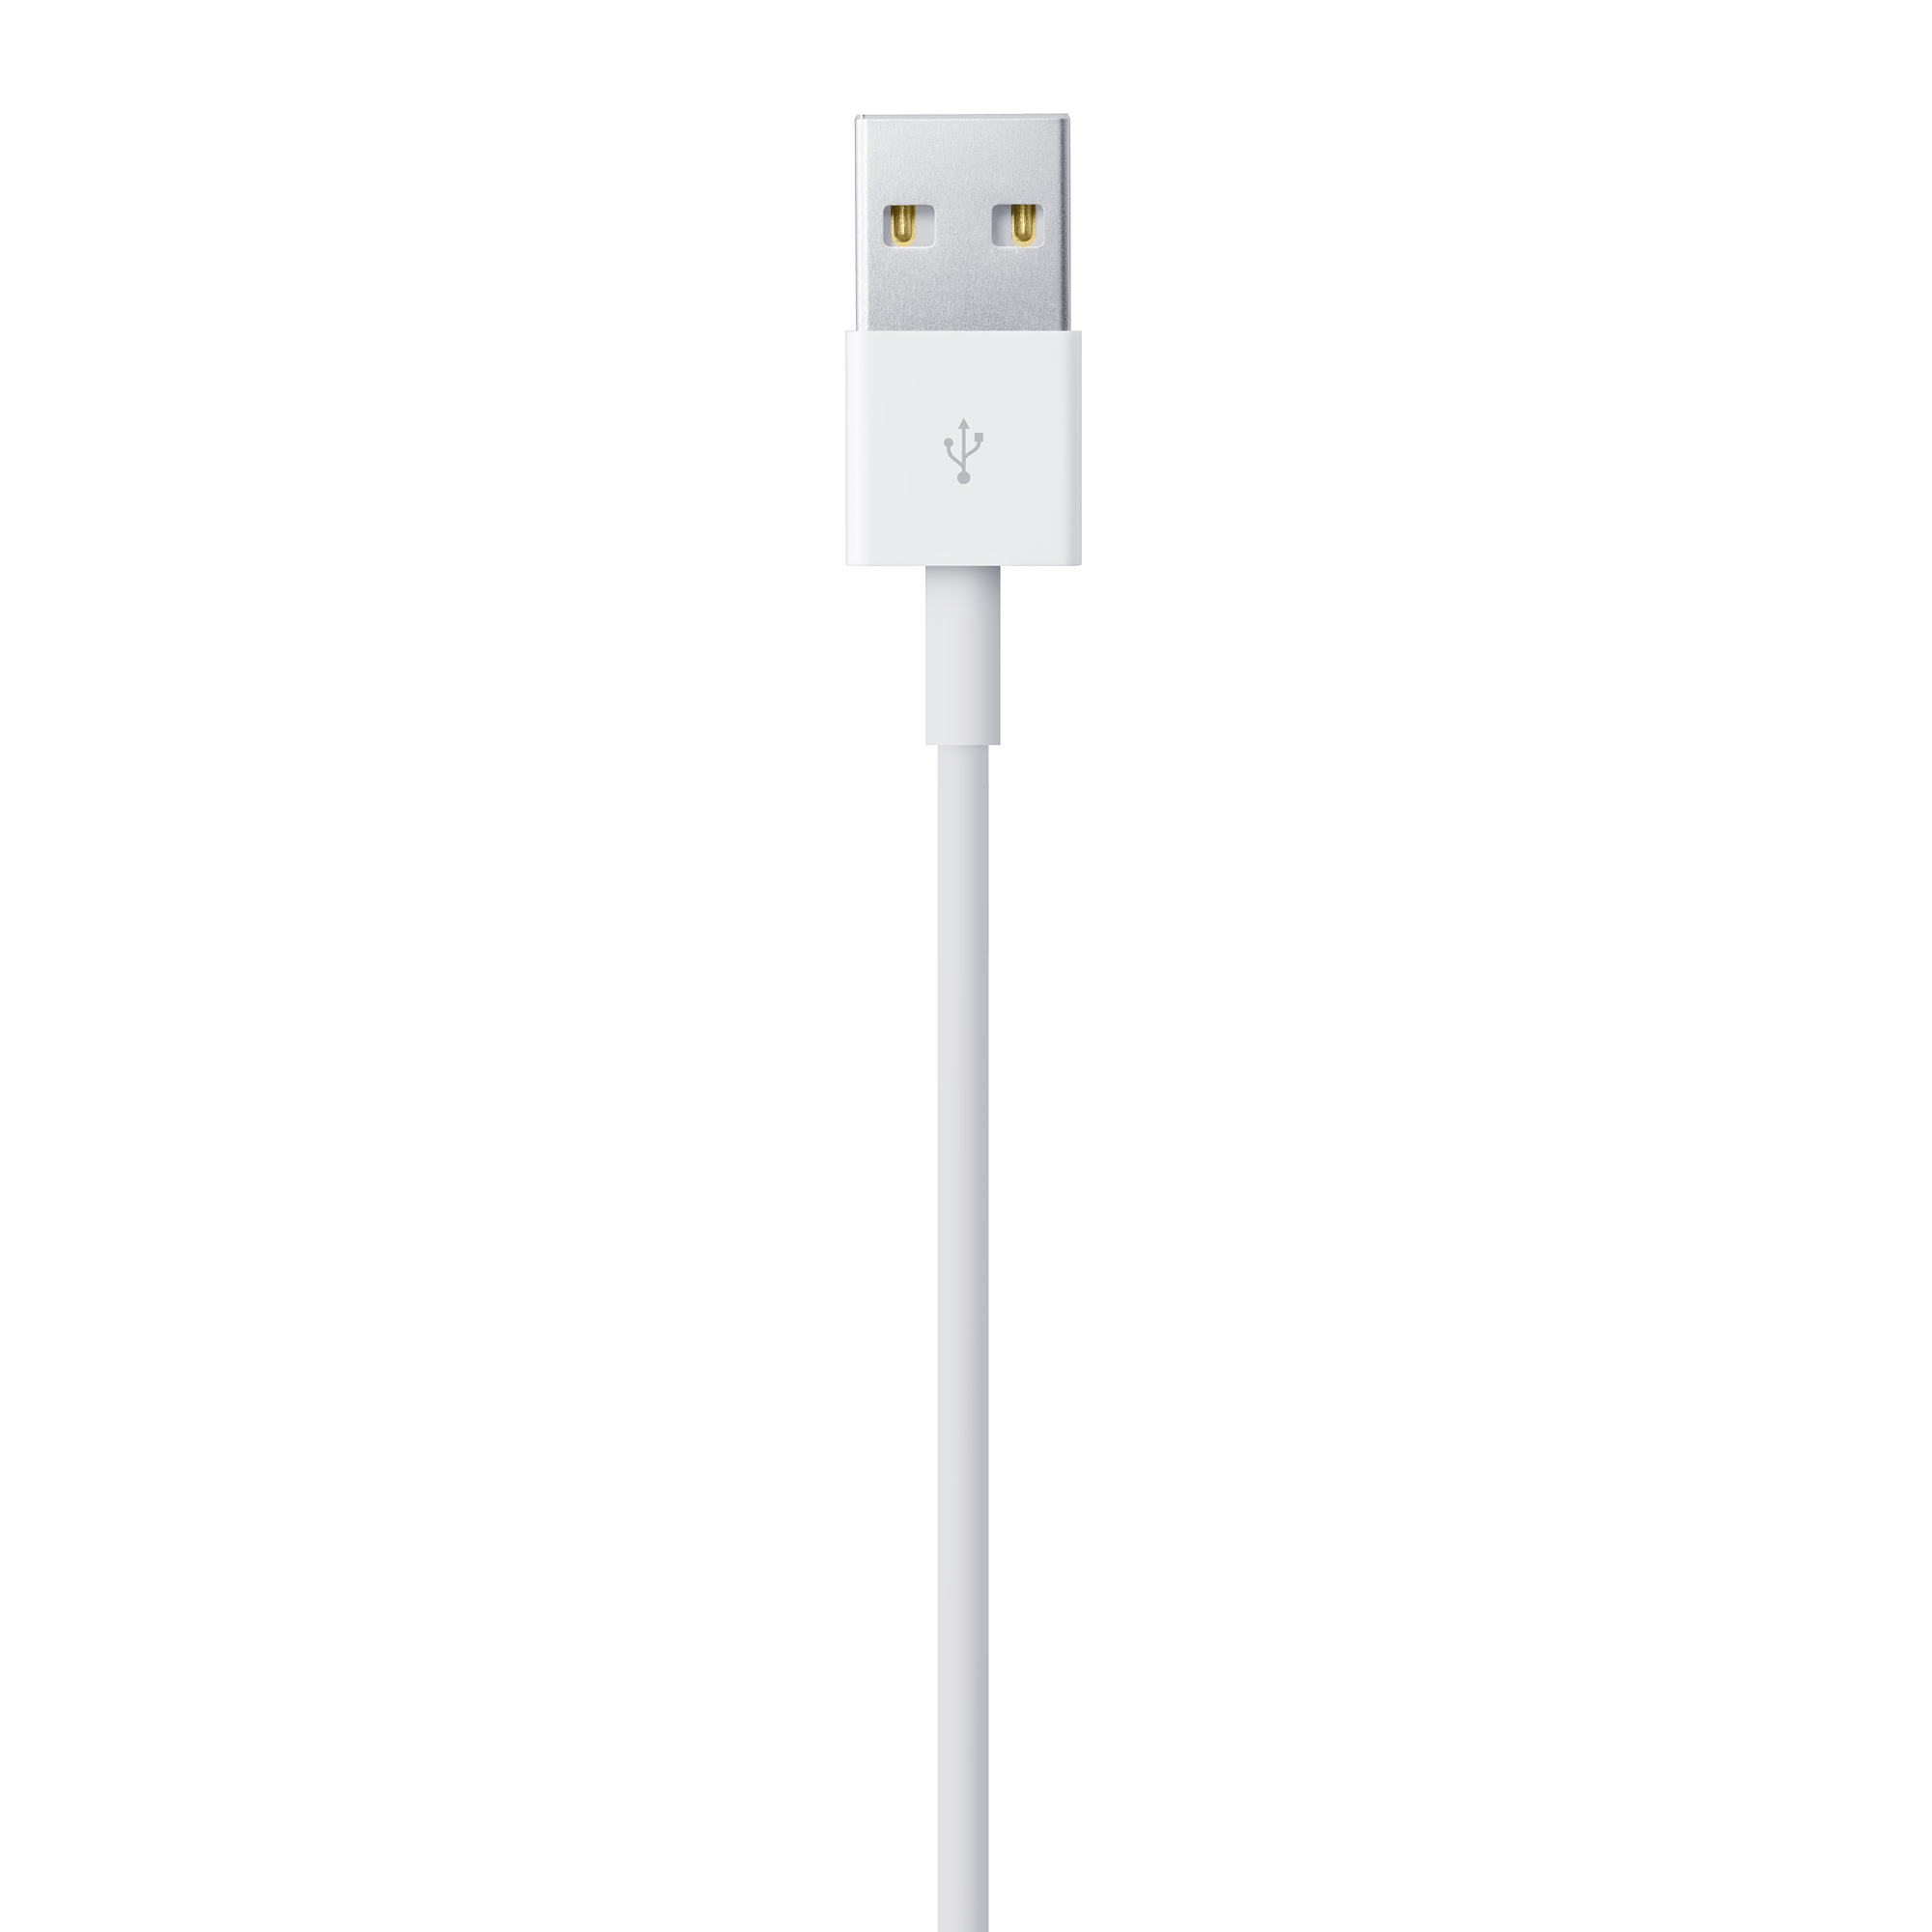 Cable Lightning USB Apple 2.0 Mt